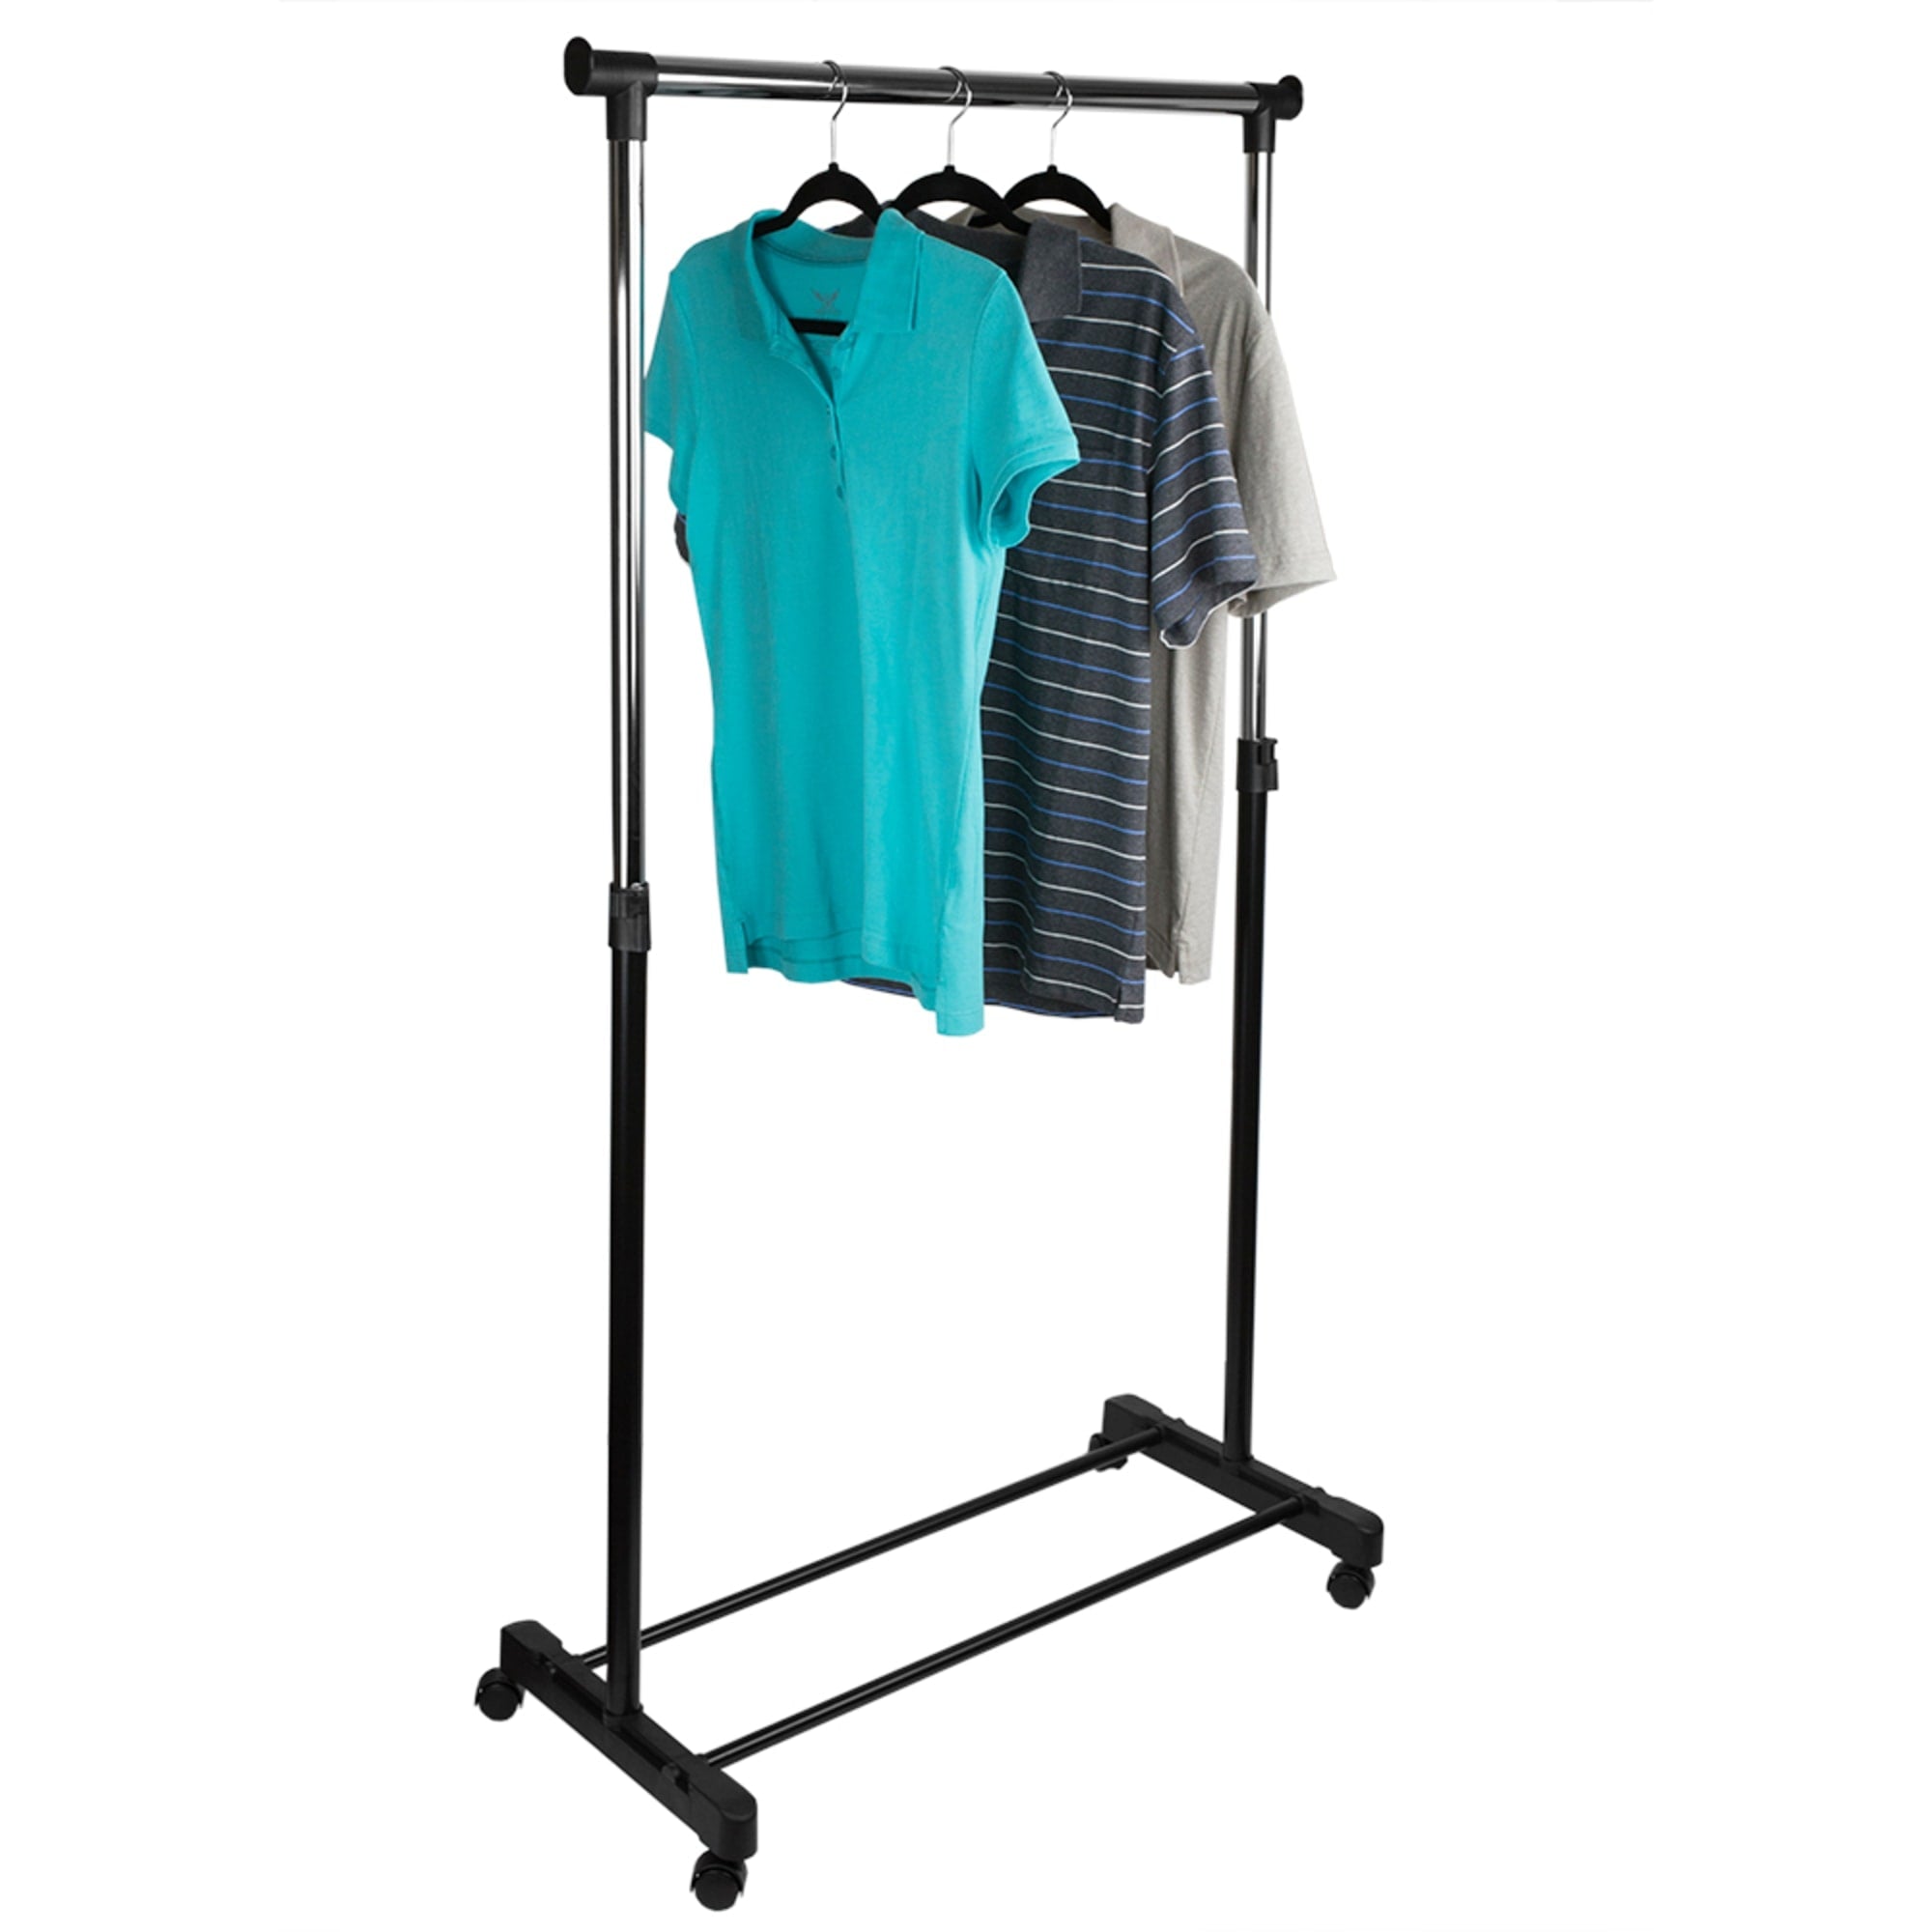 Home Basics Single Rail Adjustable Rolling Garment and Wardrobe Organizing Rack, Black $15.00 EACH, CASE PACK OF 6